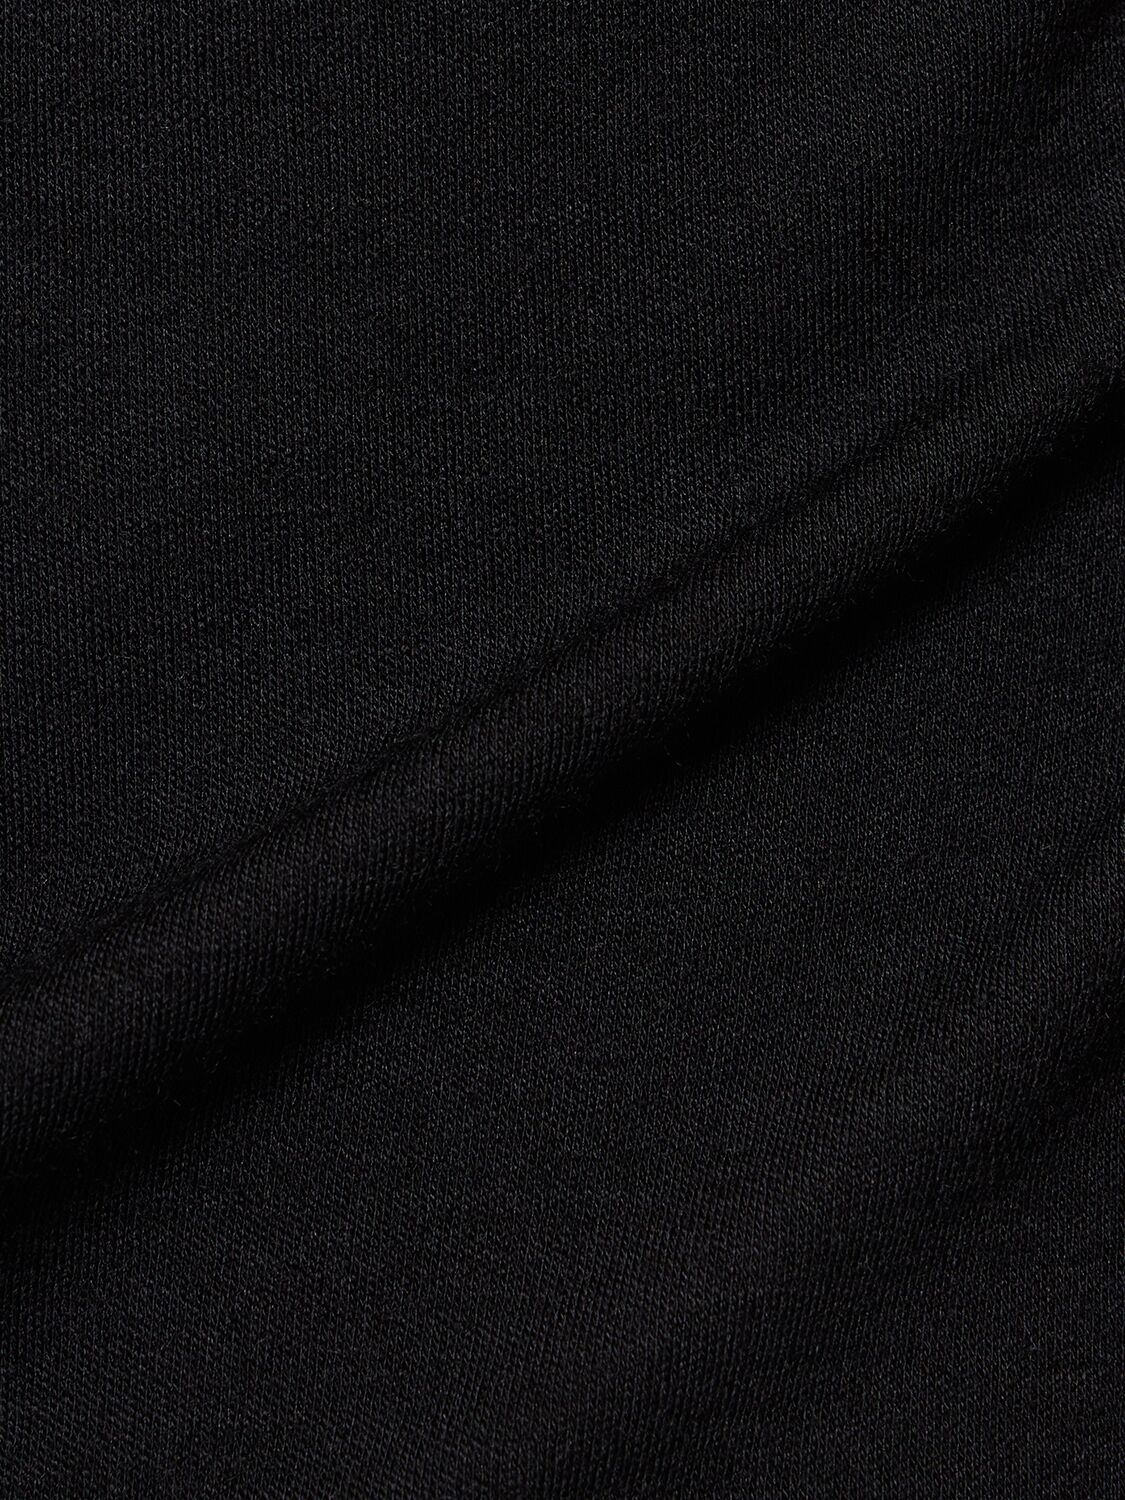 Wolford - Black Slit Bodysuit